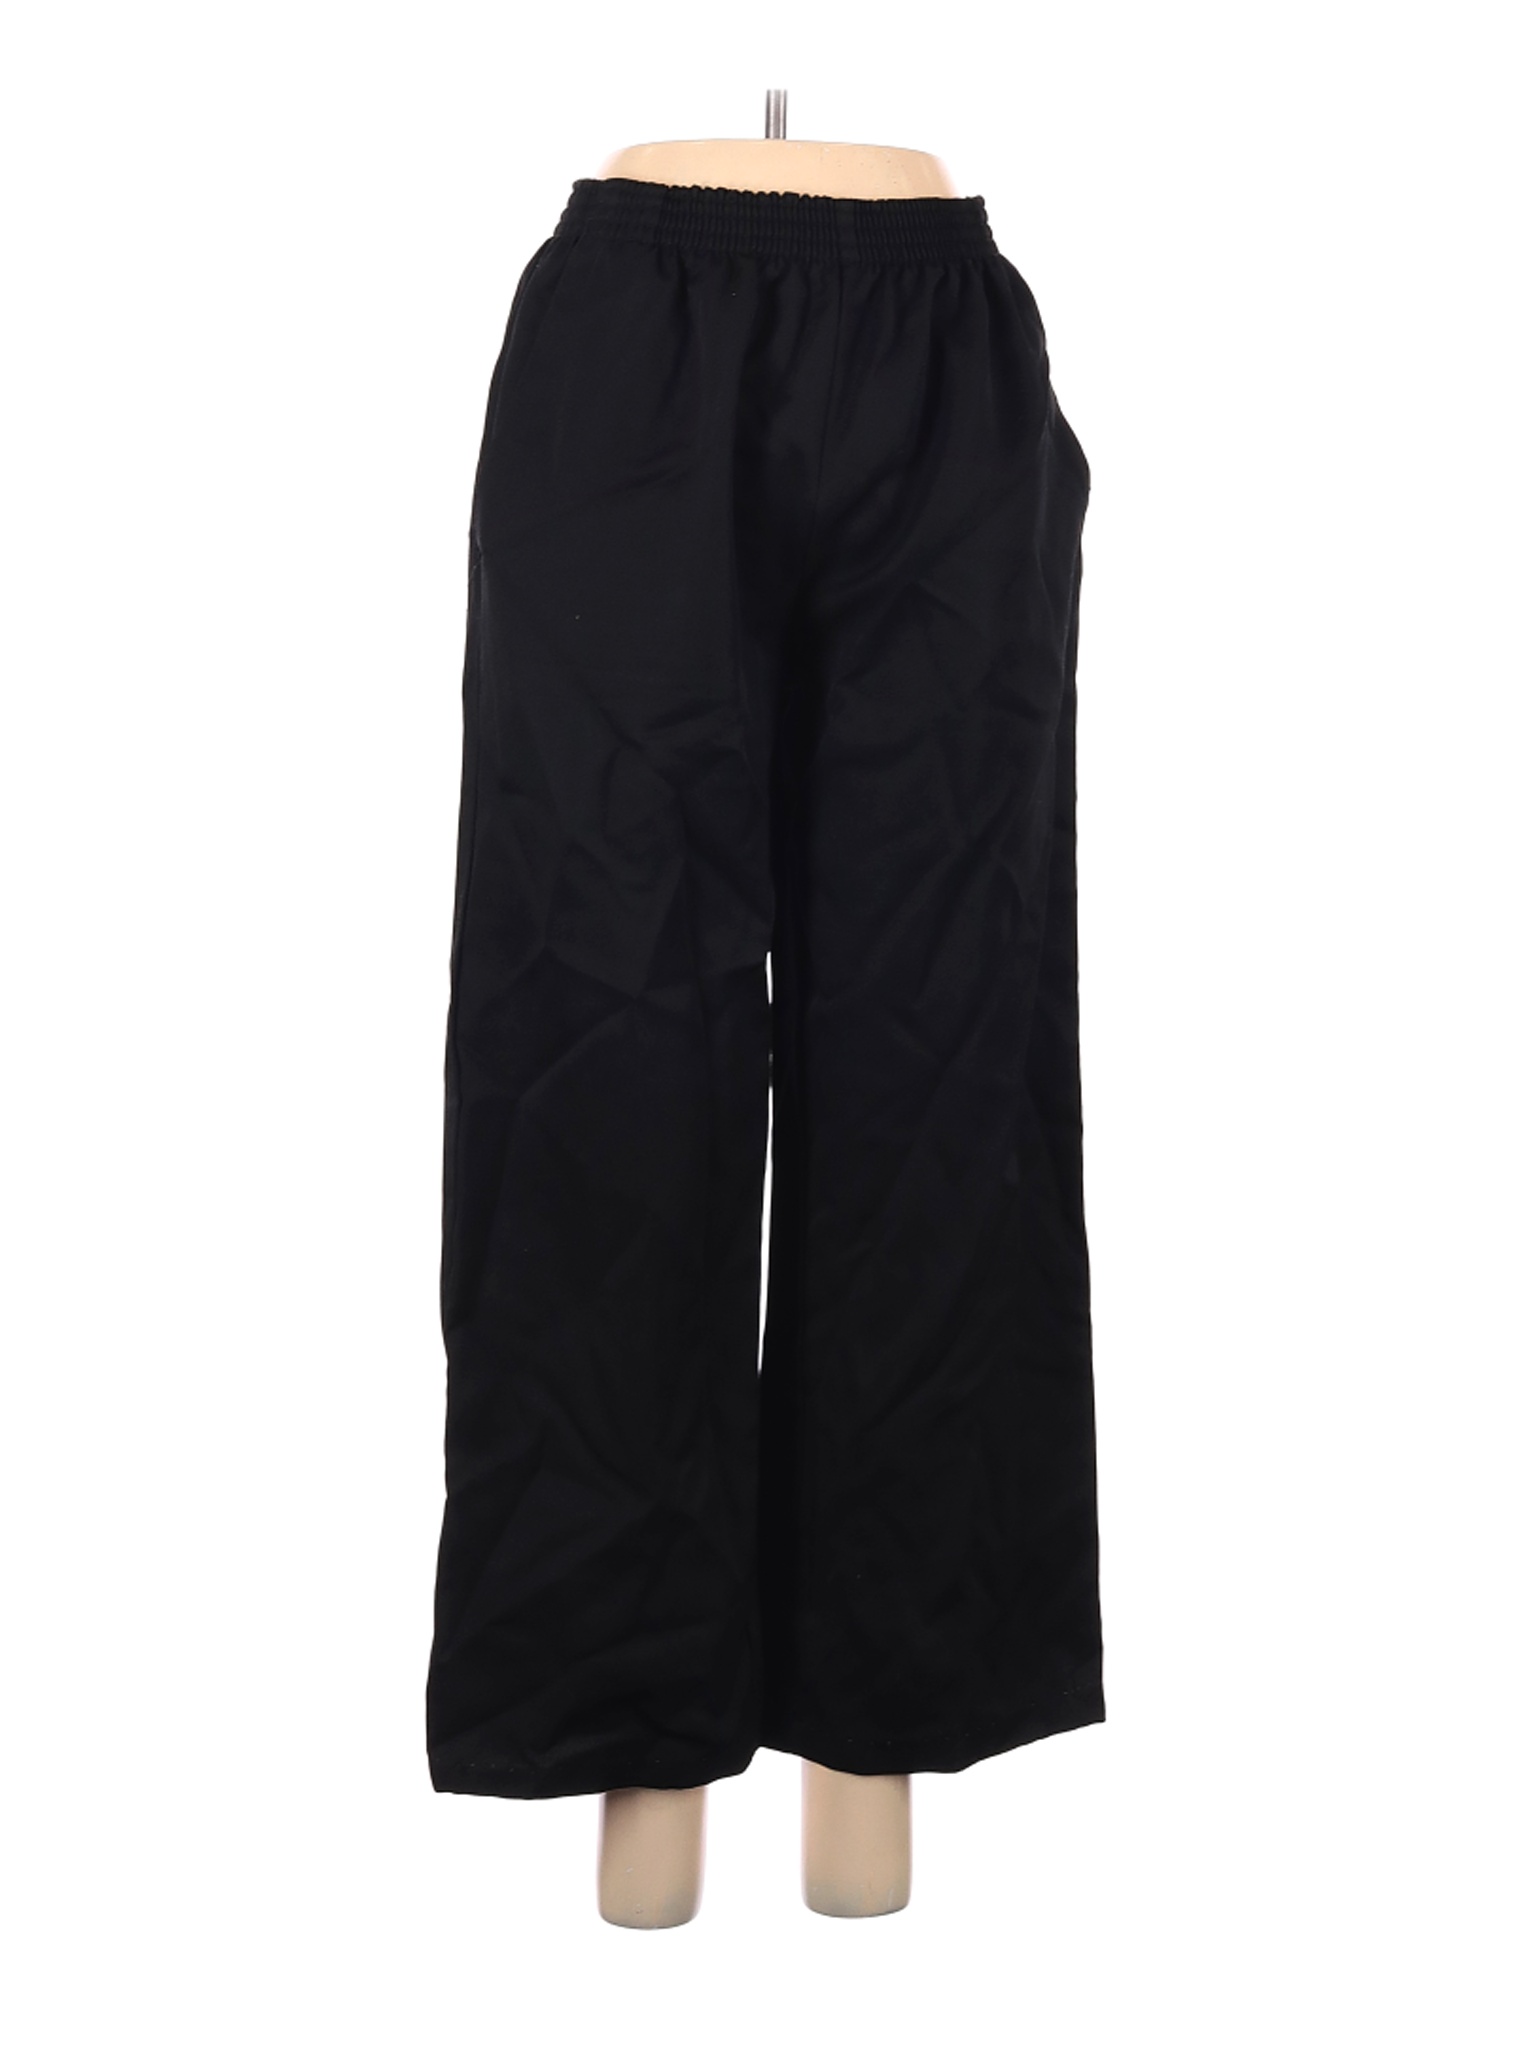 Bobbie Brooks Women Black Casual Pants M | eBay